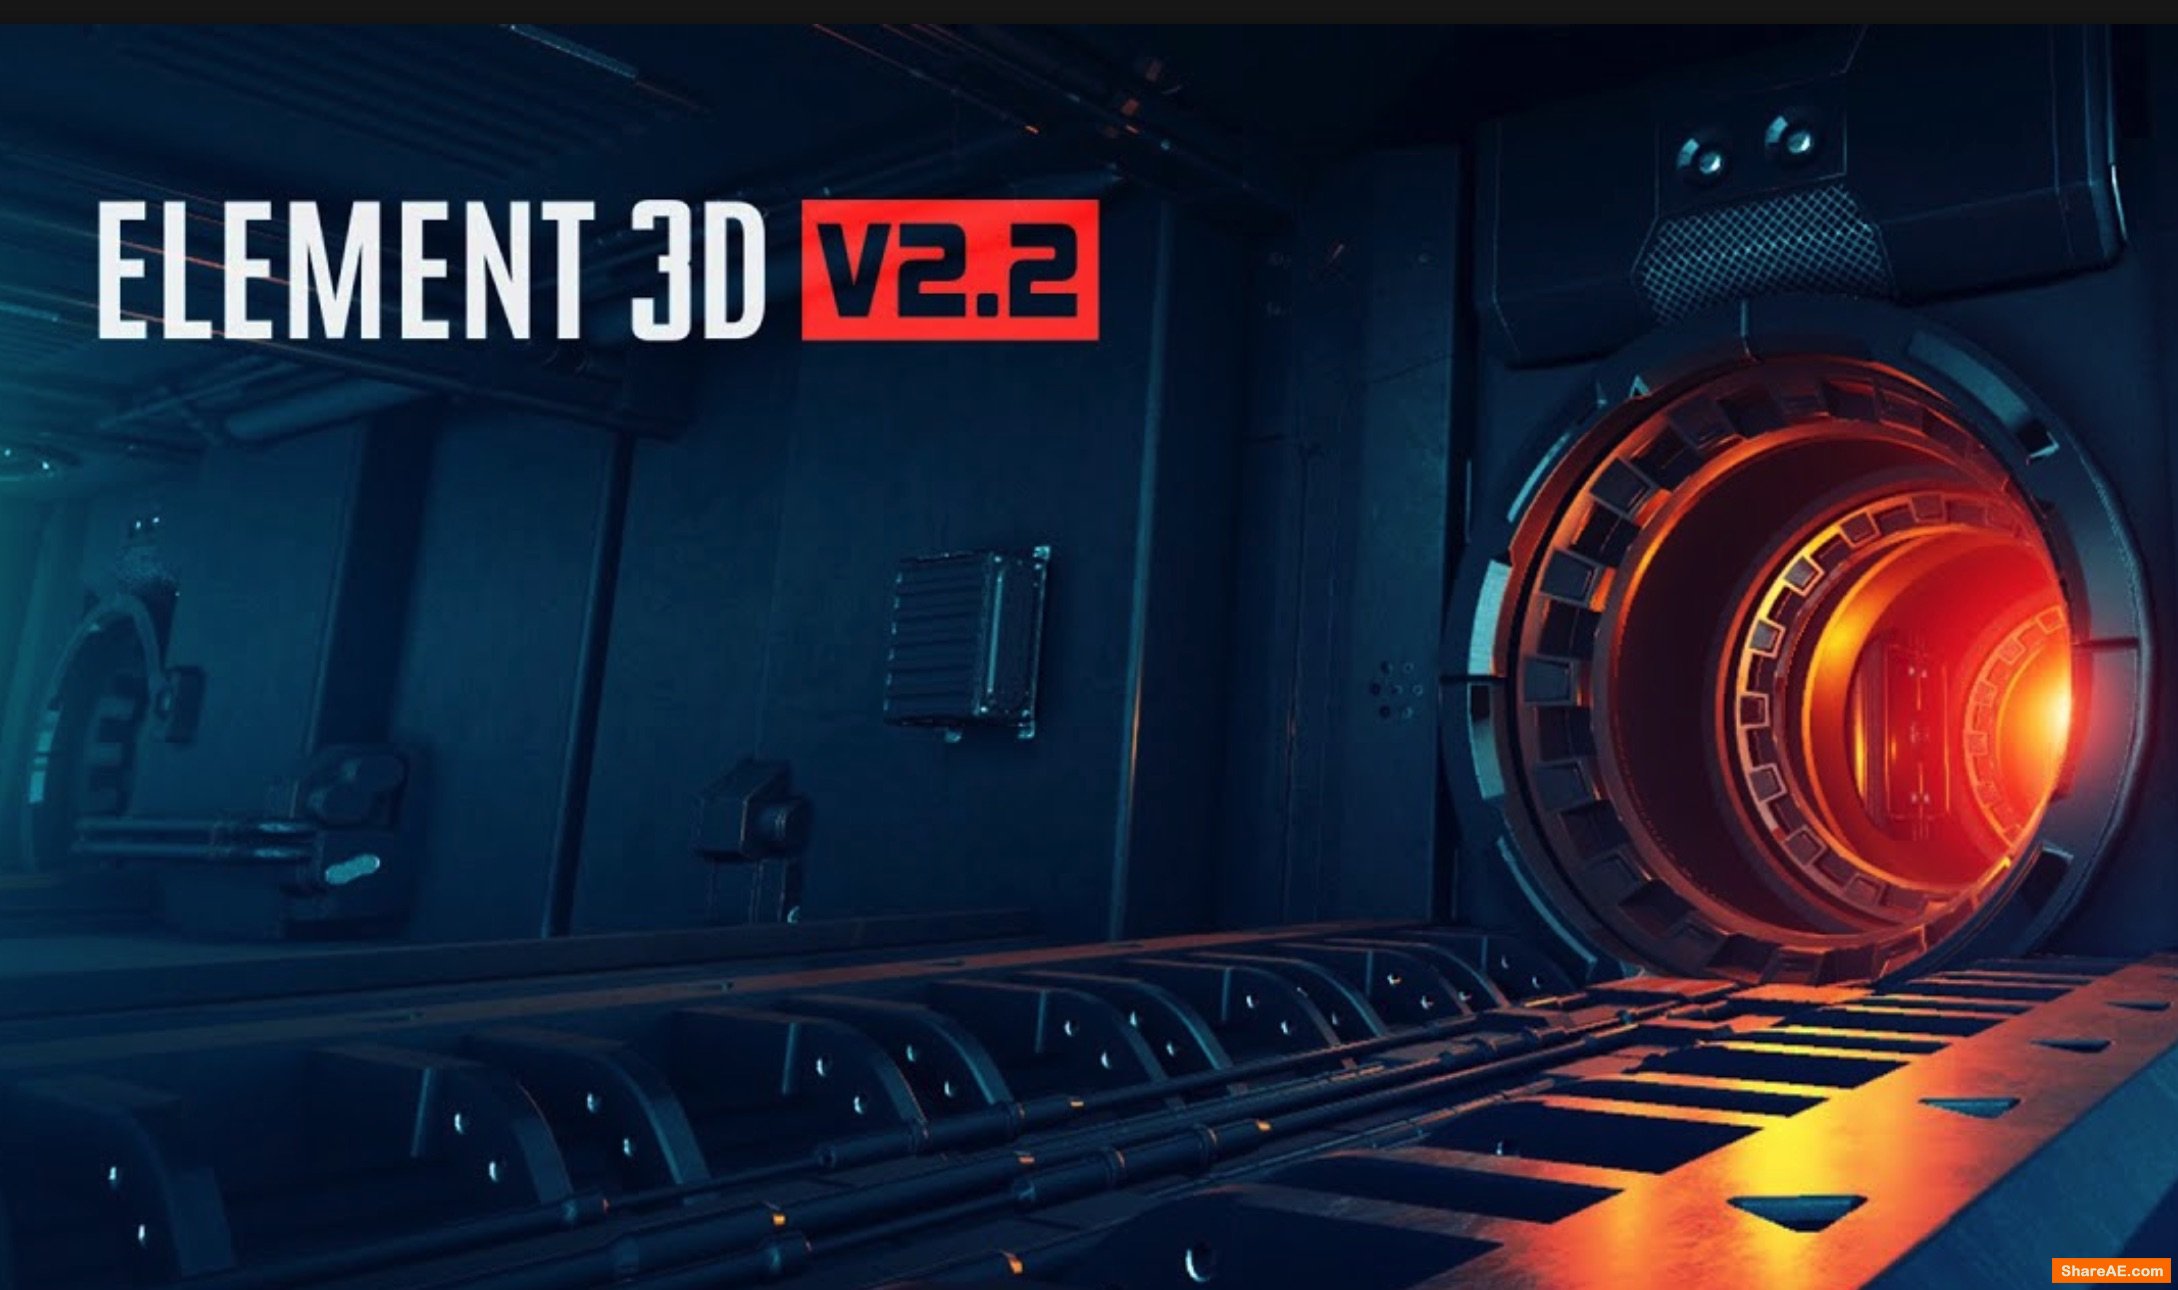 Video copilot element 3d 2.2.2 build 2168 crack free download free